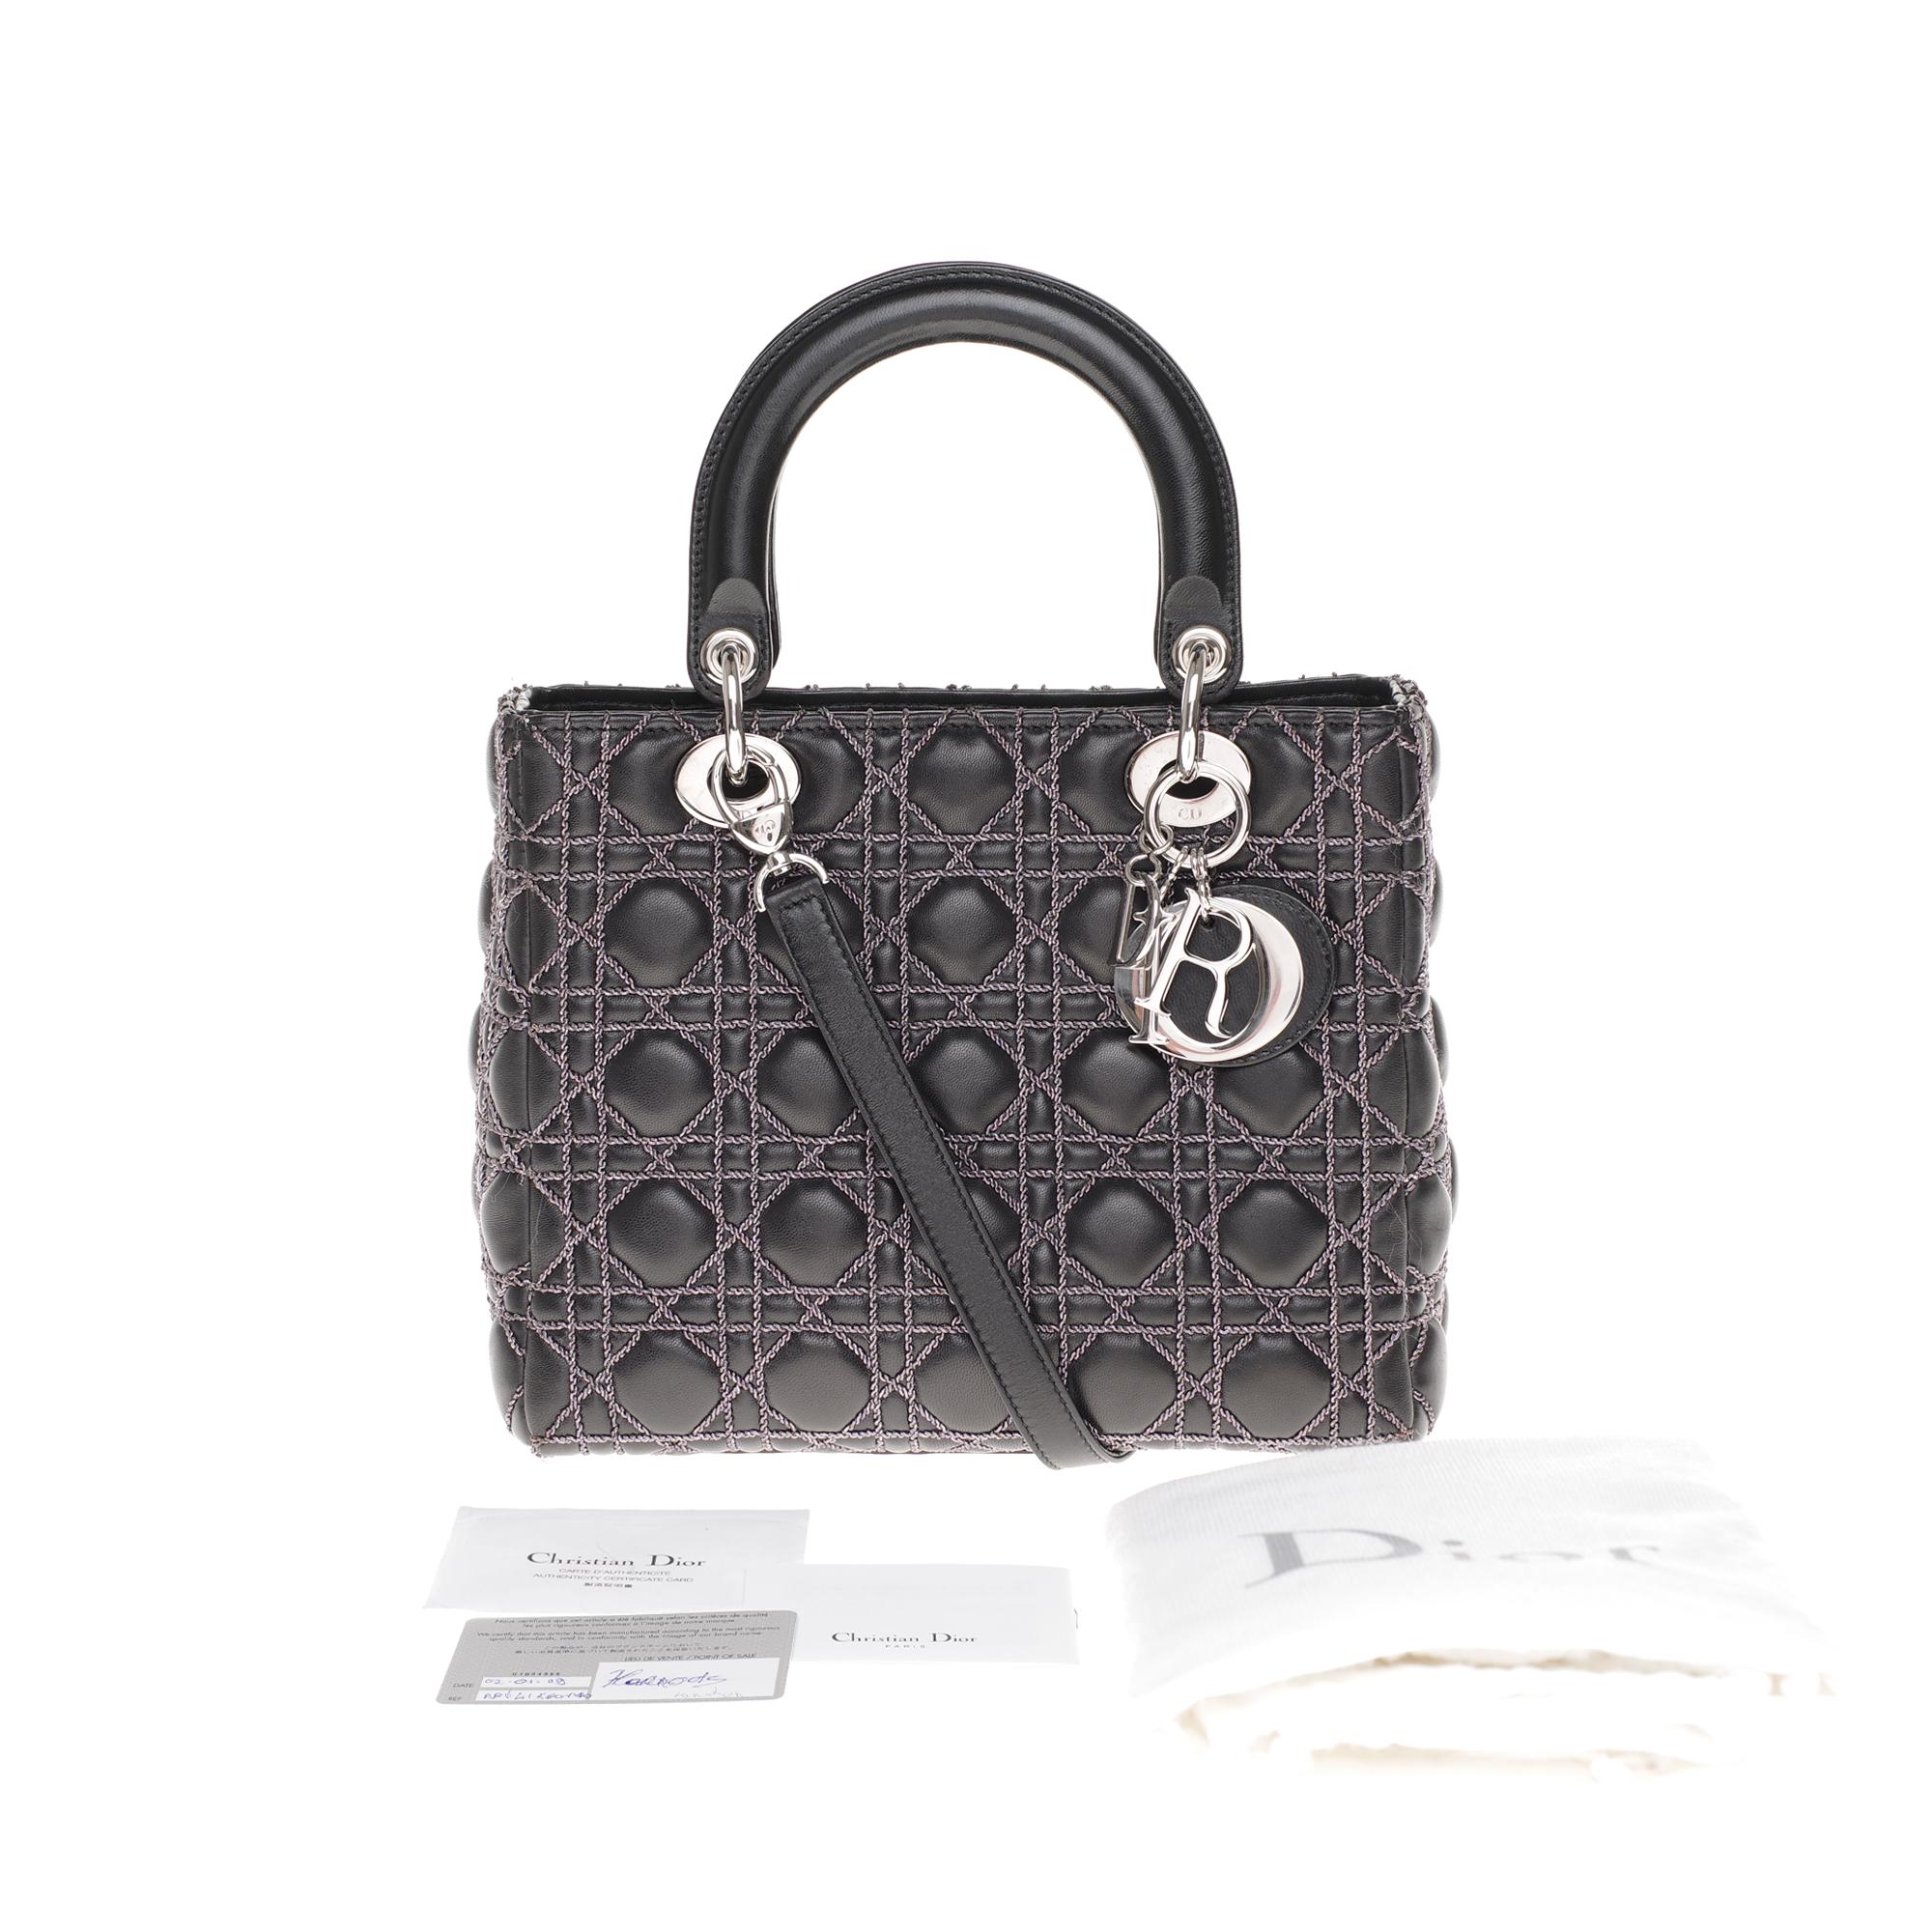  Limited Edition-Christian Dior Lady Dior MM handbag in black cannage leather 4